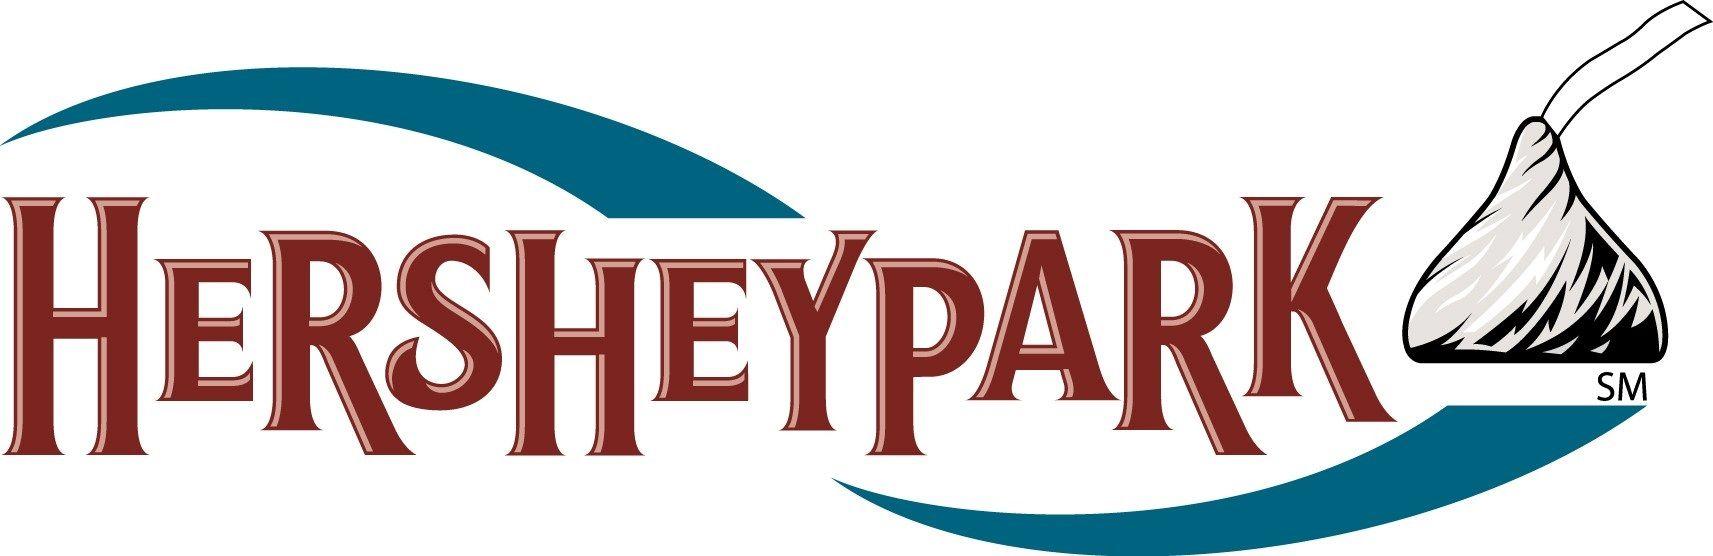 Hersheypark Logo - Hersheypark | Logopedia | FANDOM powered by Wikia